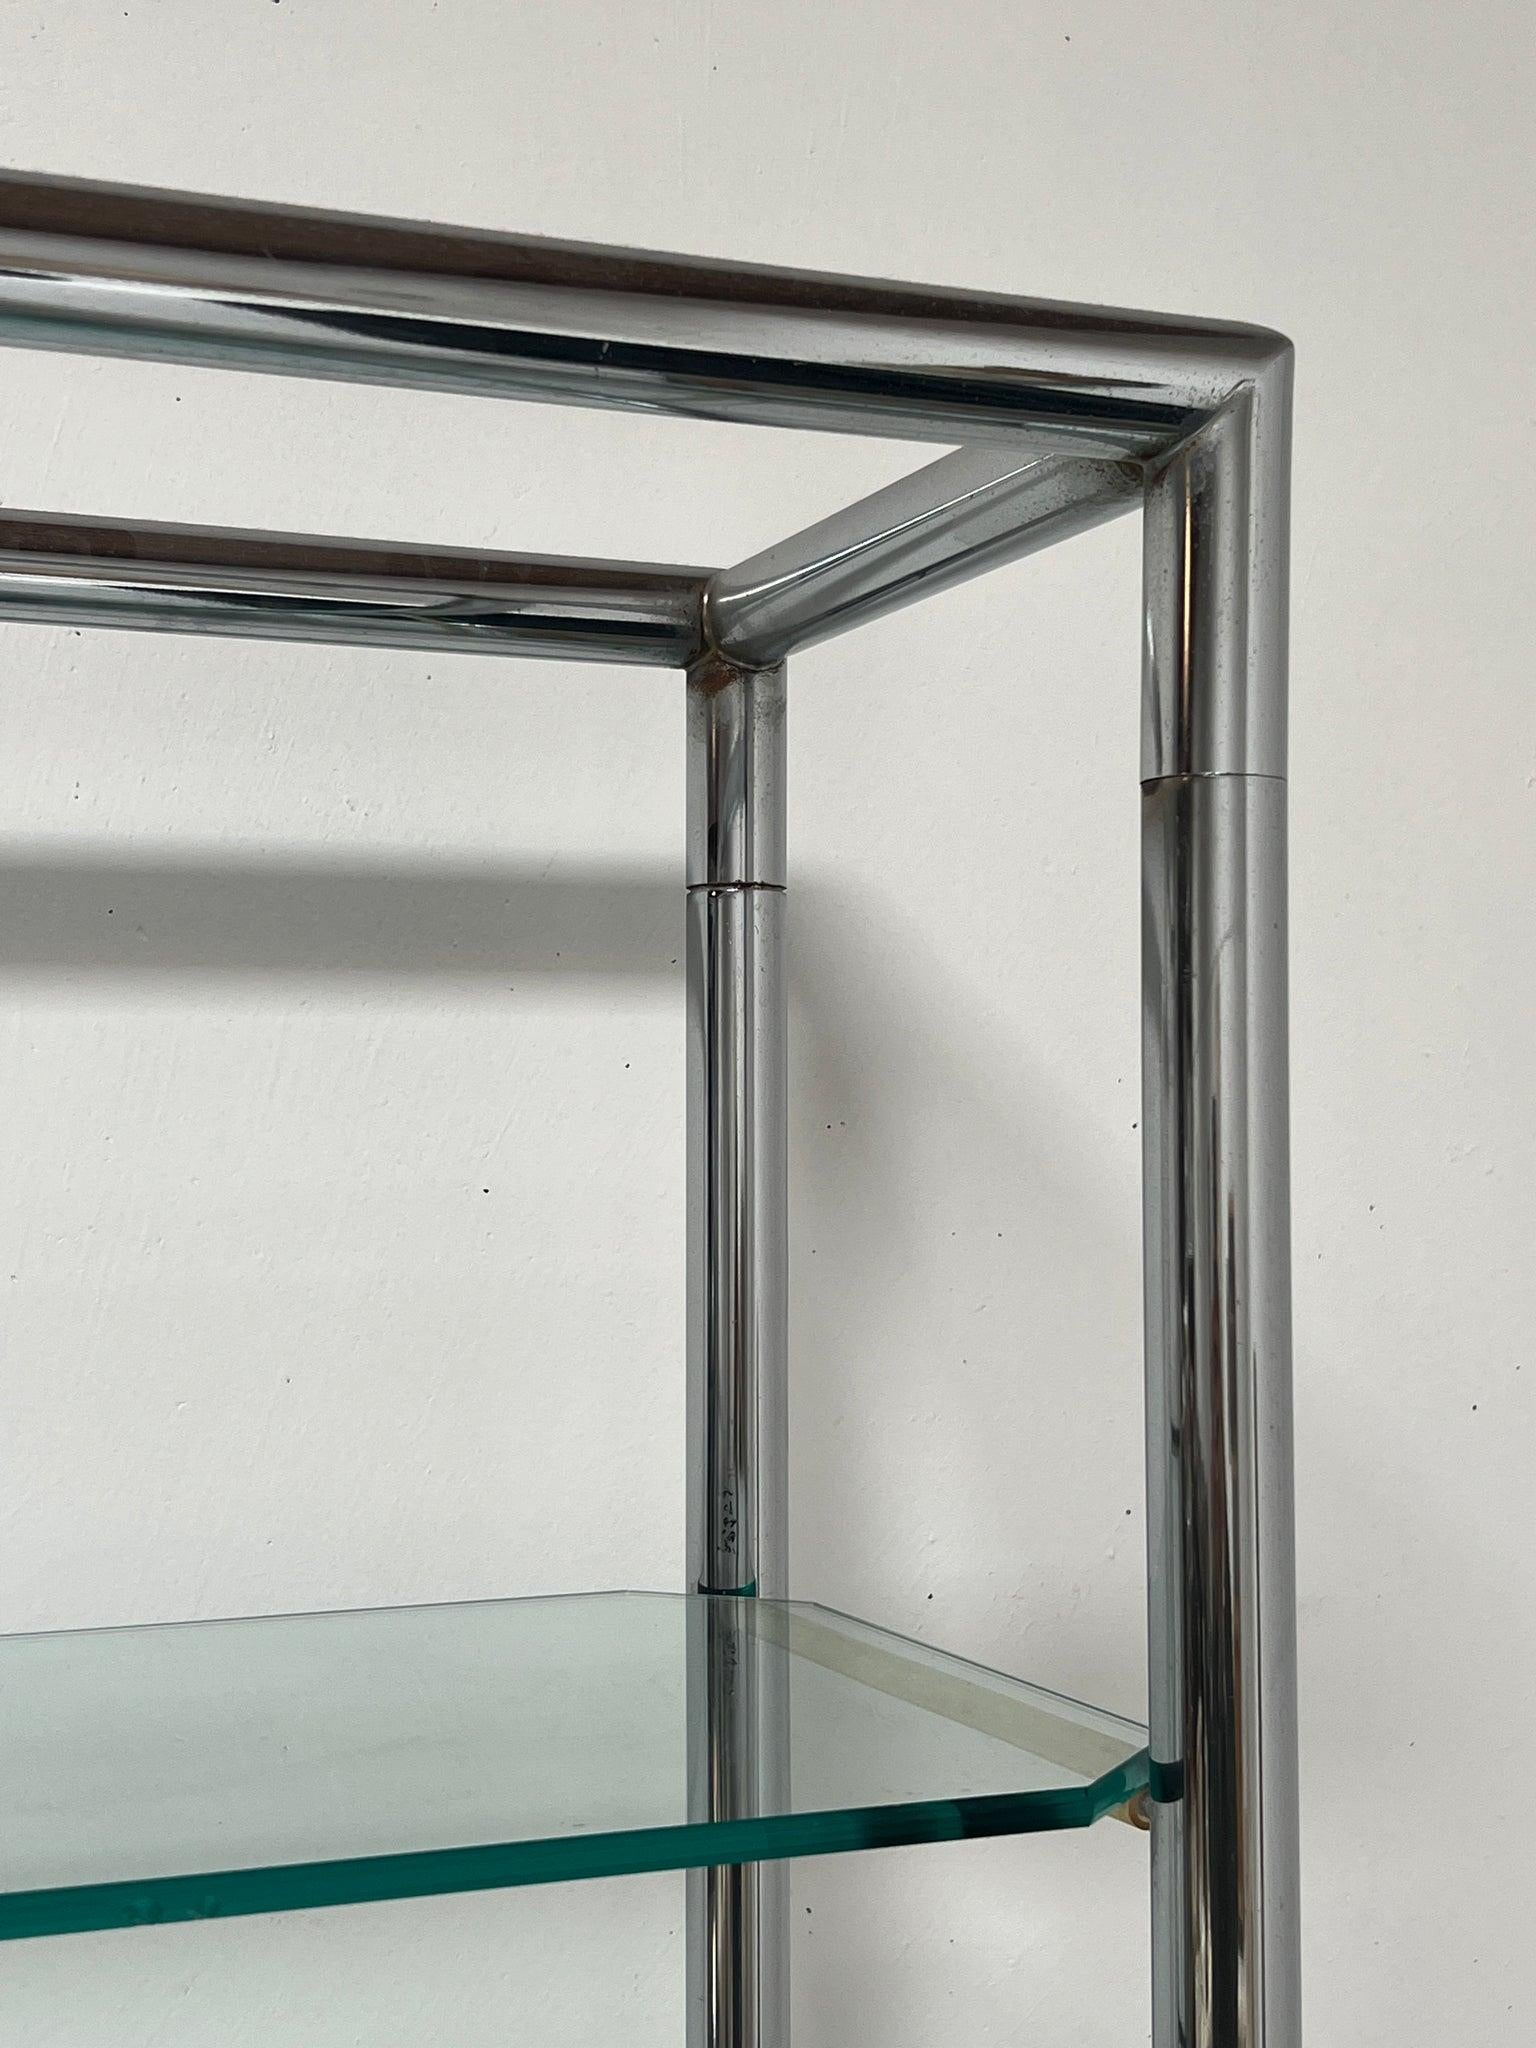 chrome and glass shelving unit